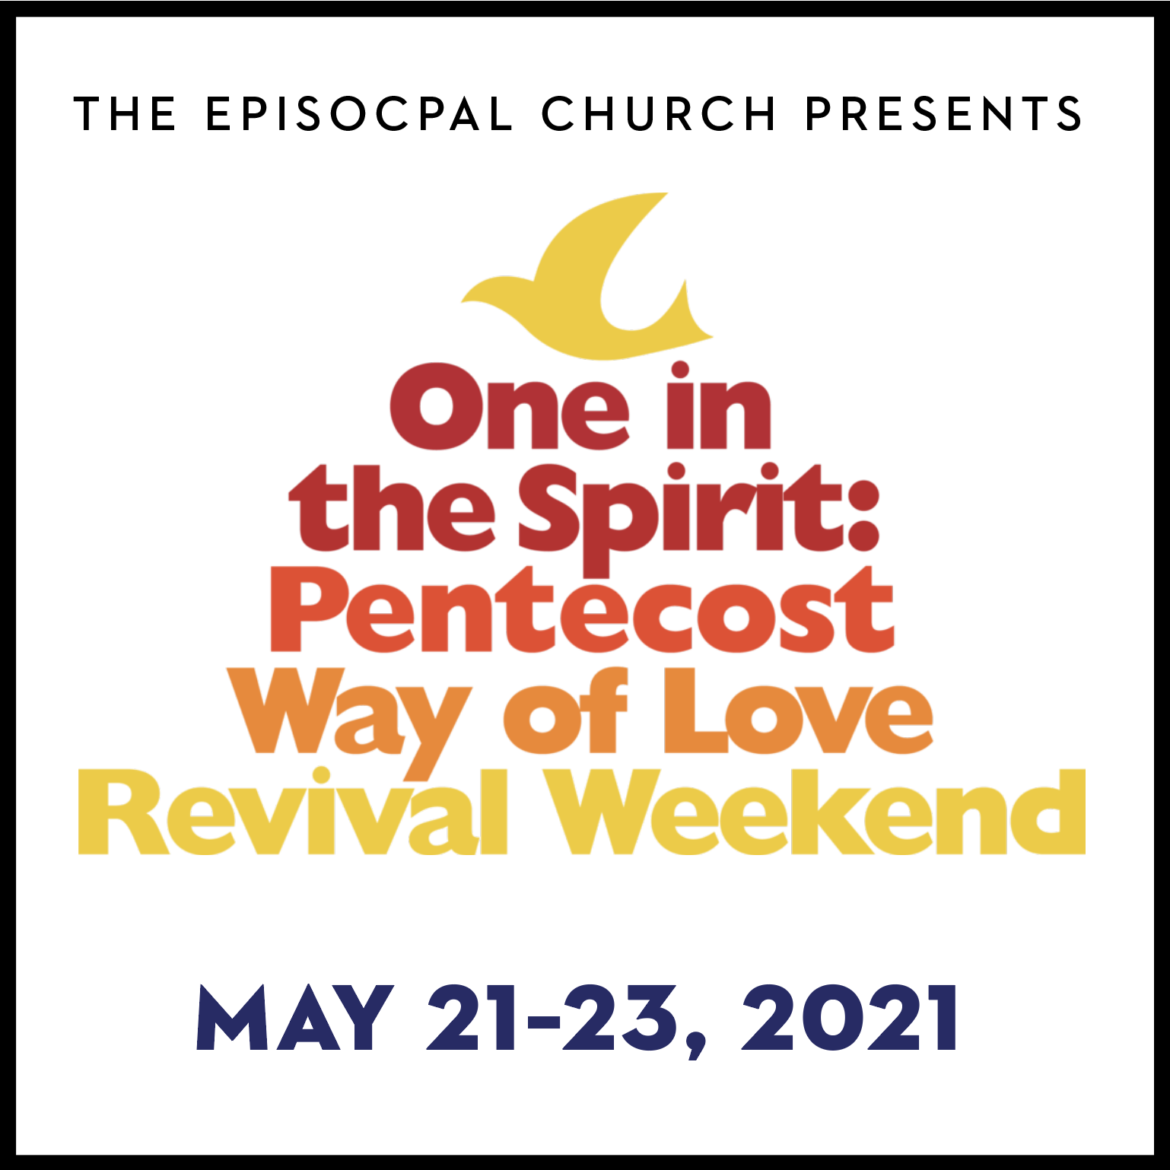 Pentecost “Way of Love” Revival Weekend